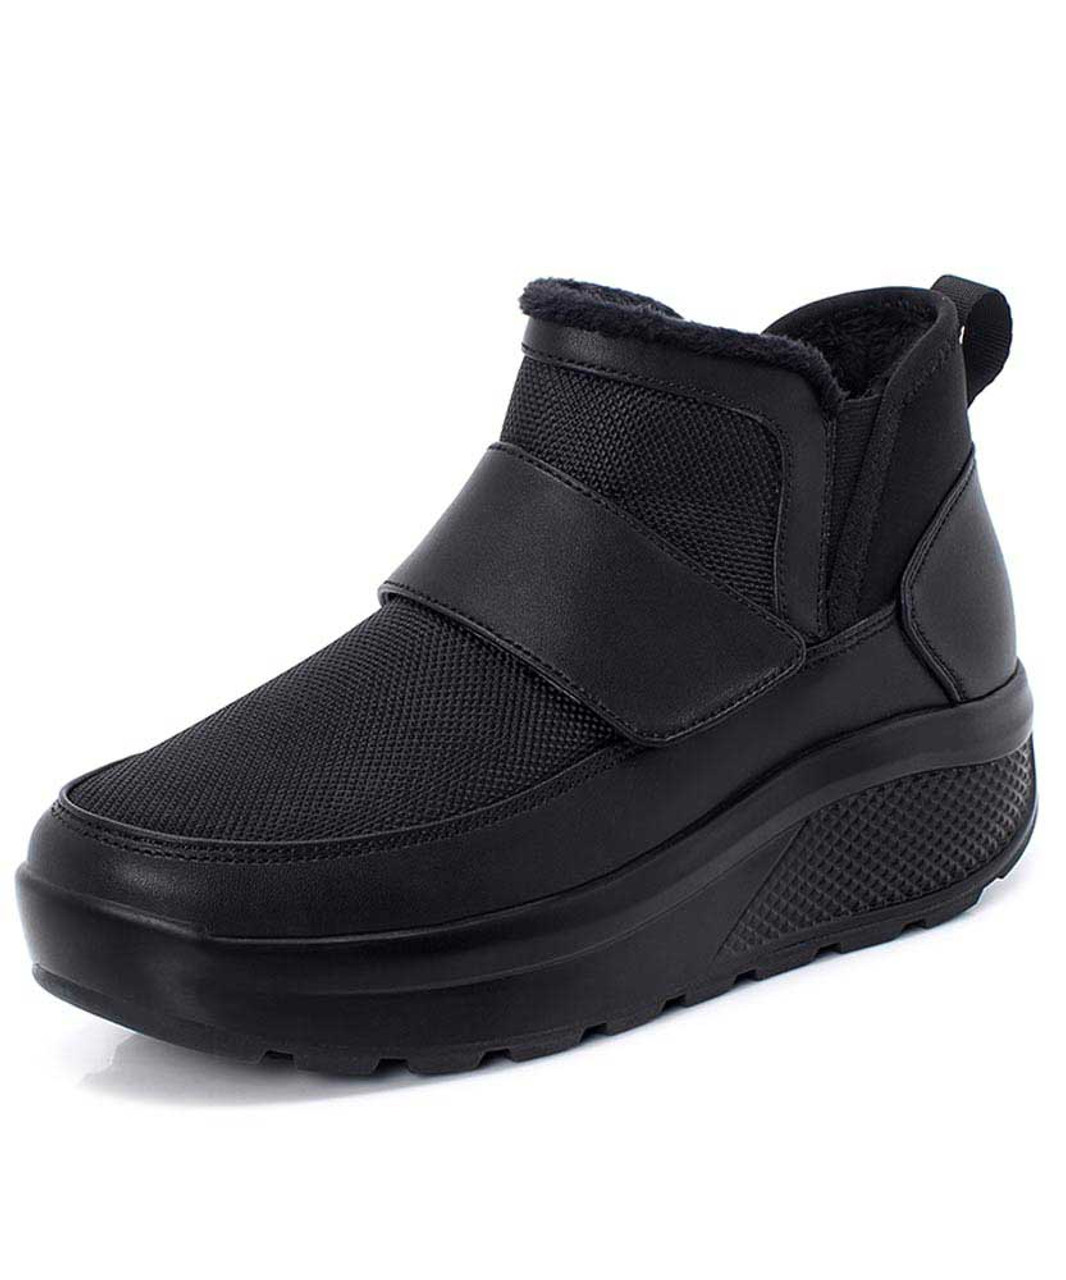 black velcro shoes womens